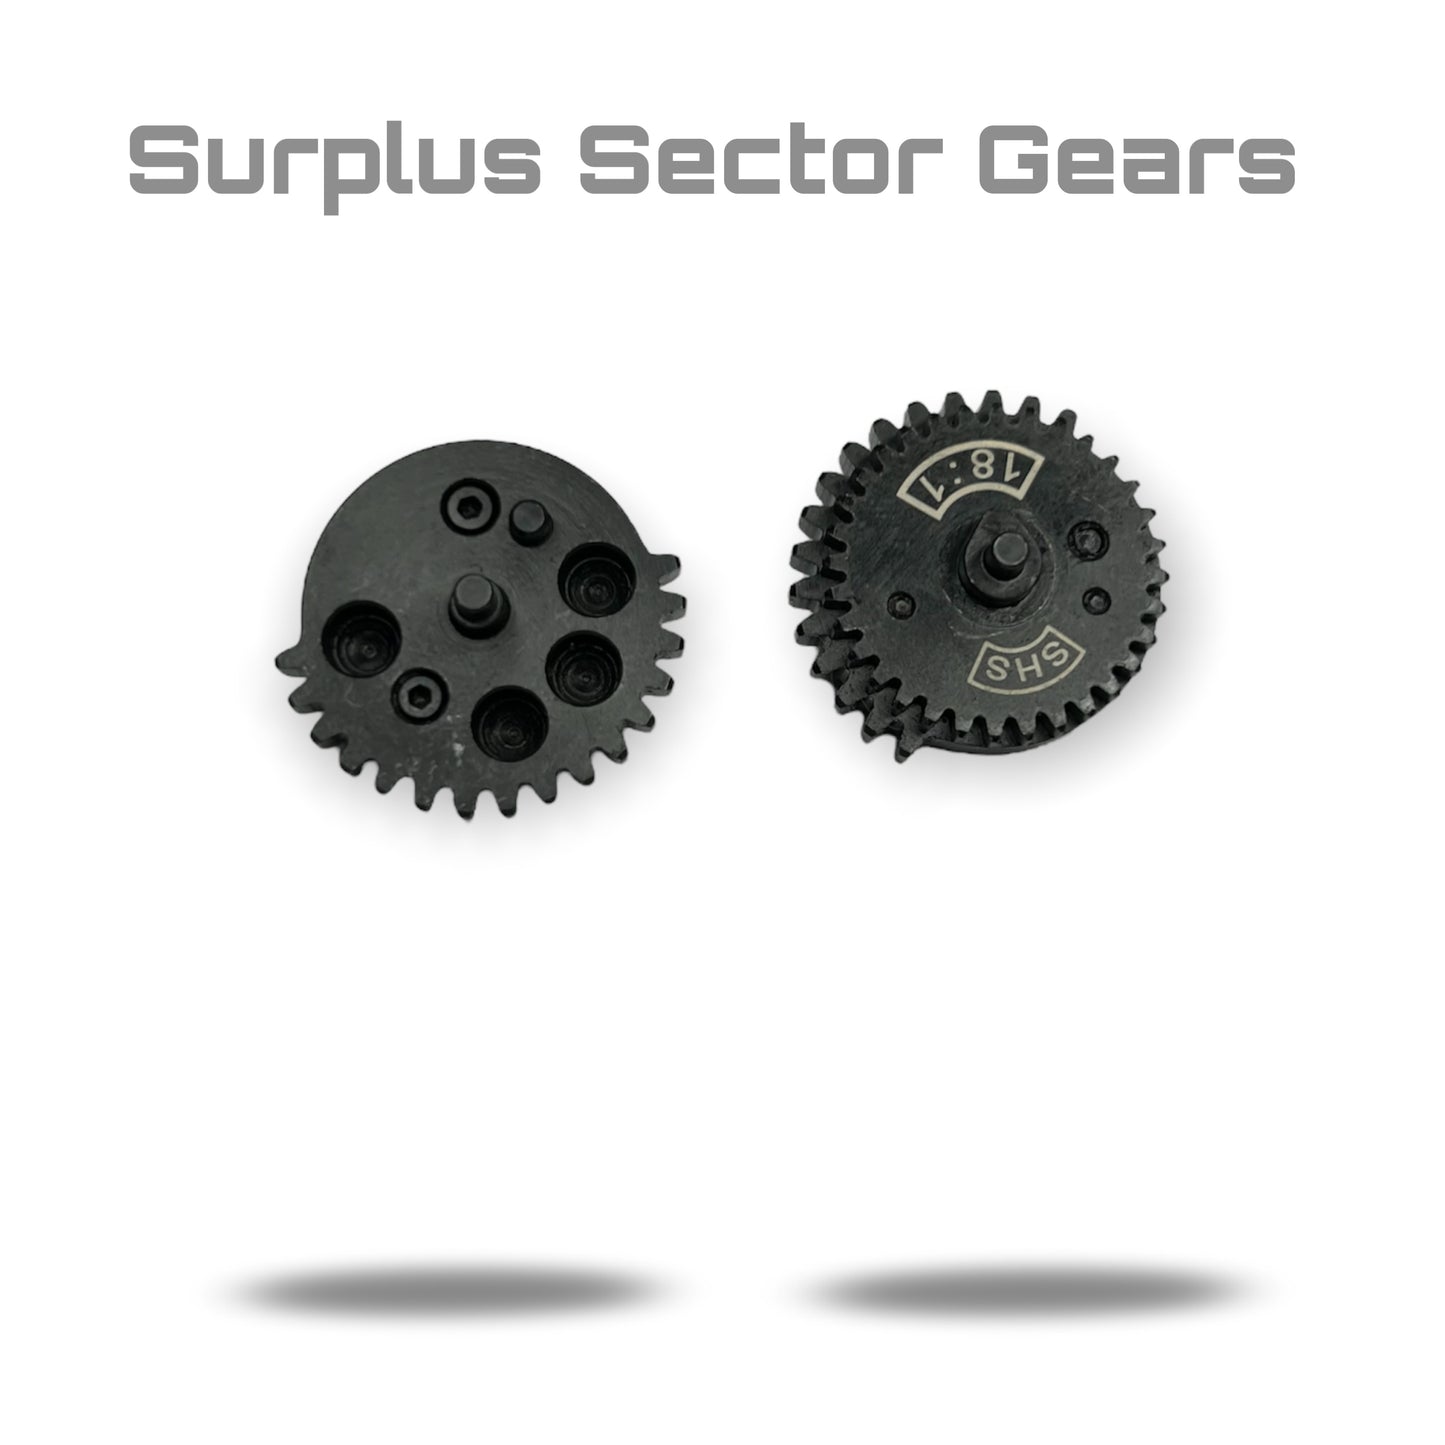 Surplus 18:1 Sector Gears